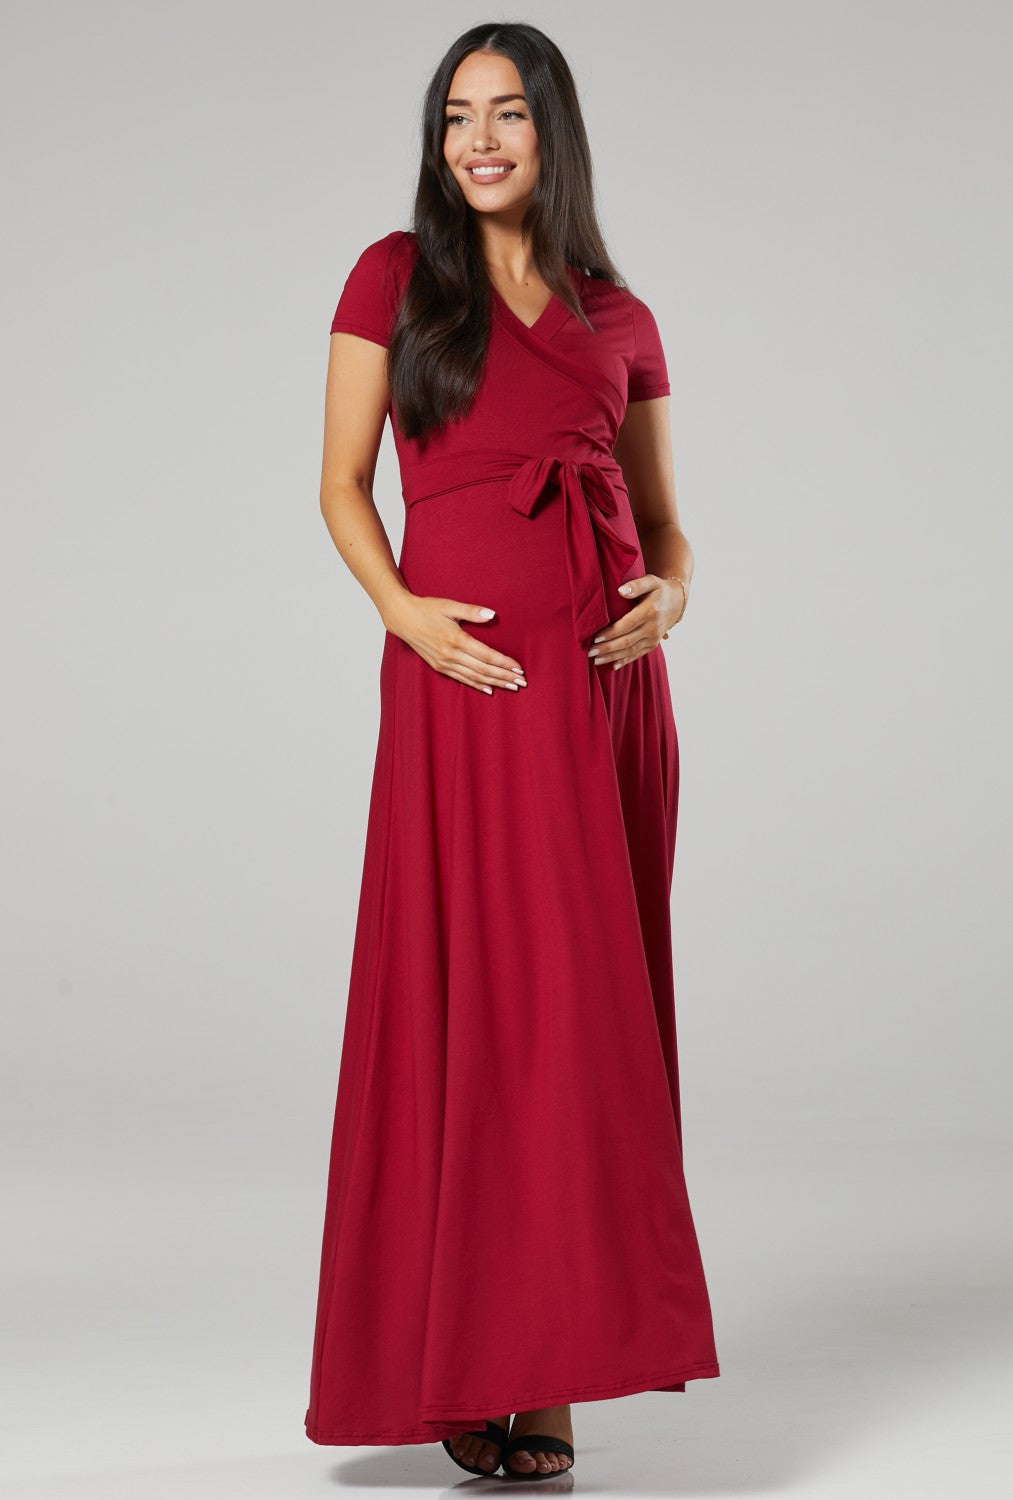 Maternity Nursing Maxi Wrap Dress Short Sleeve